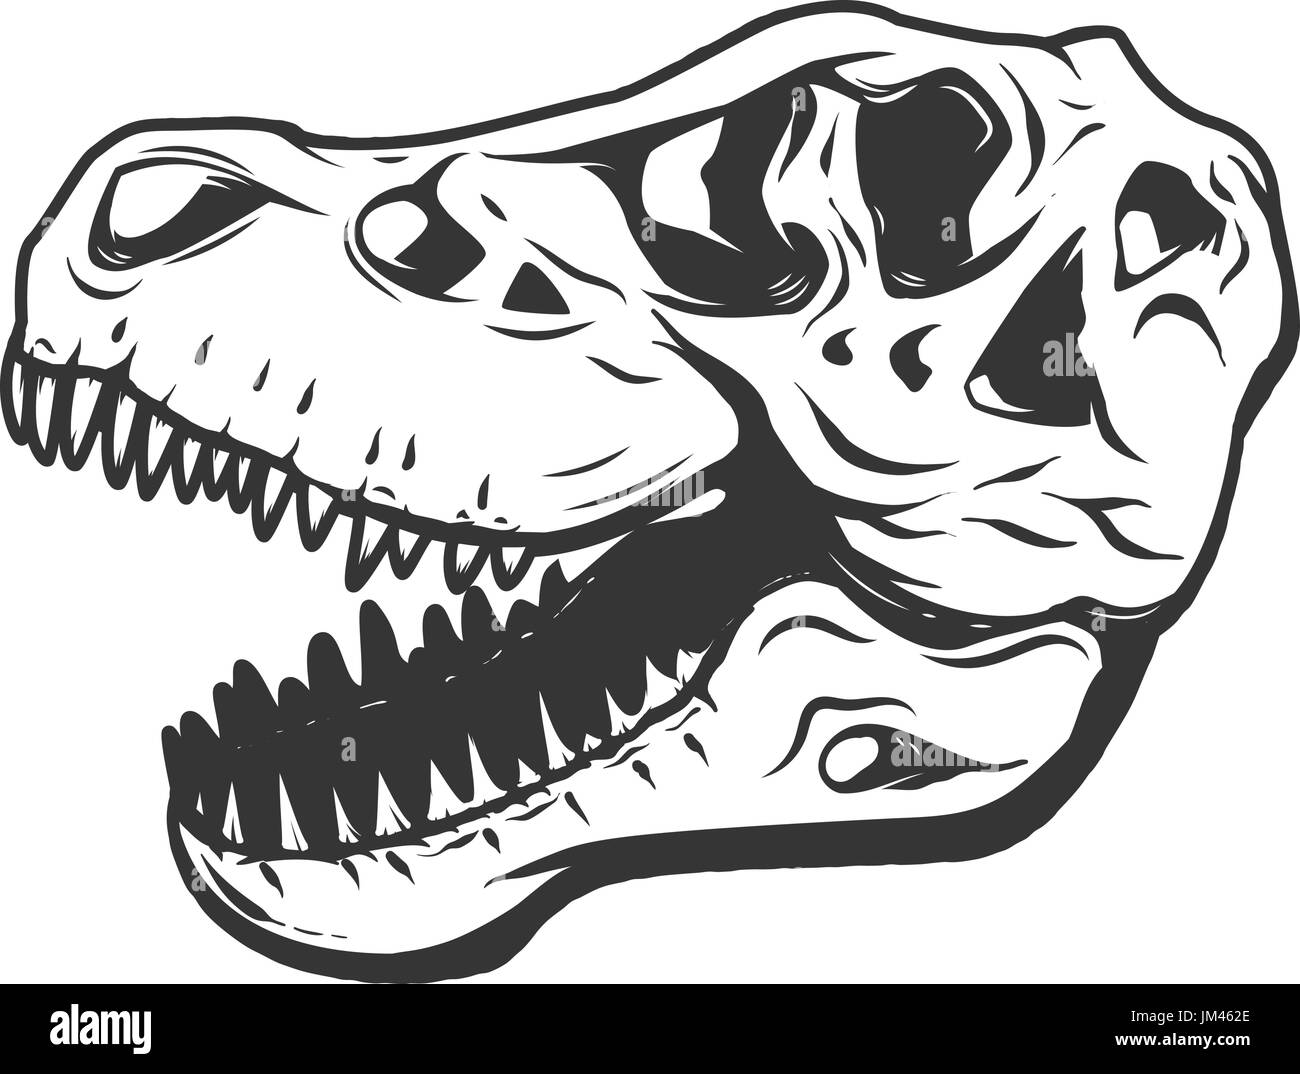 t-rex dinosaur skull isolated on white background. Images for logo, label, emblem. Vector illustration. Stock Vector